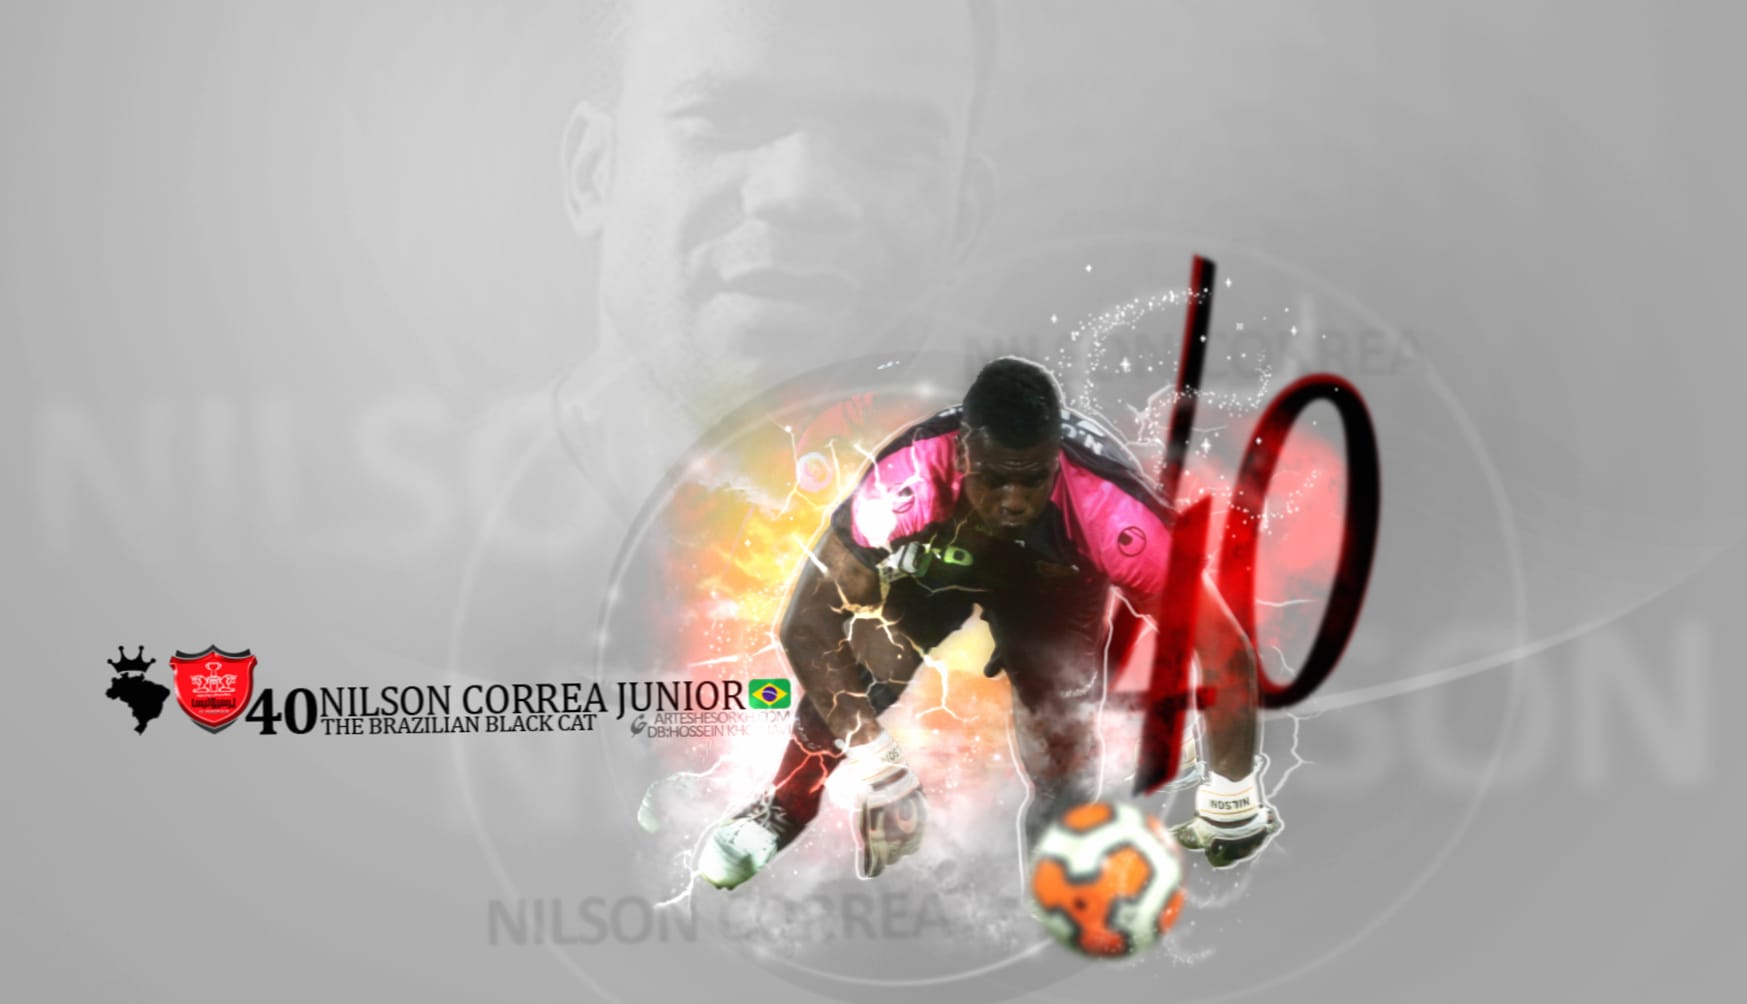 Nilson Correa Junior wallpapers HD quality